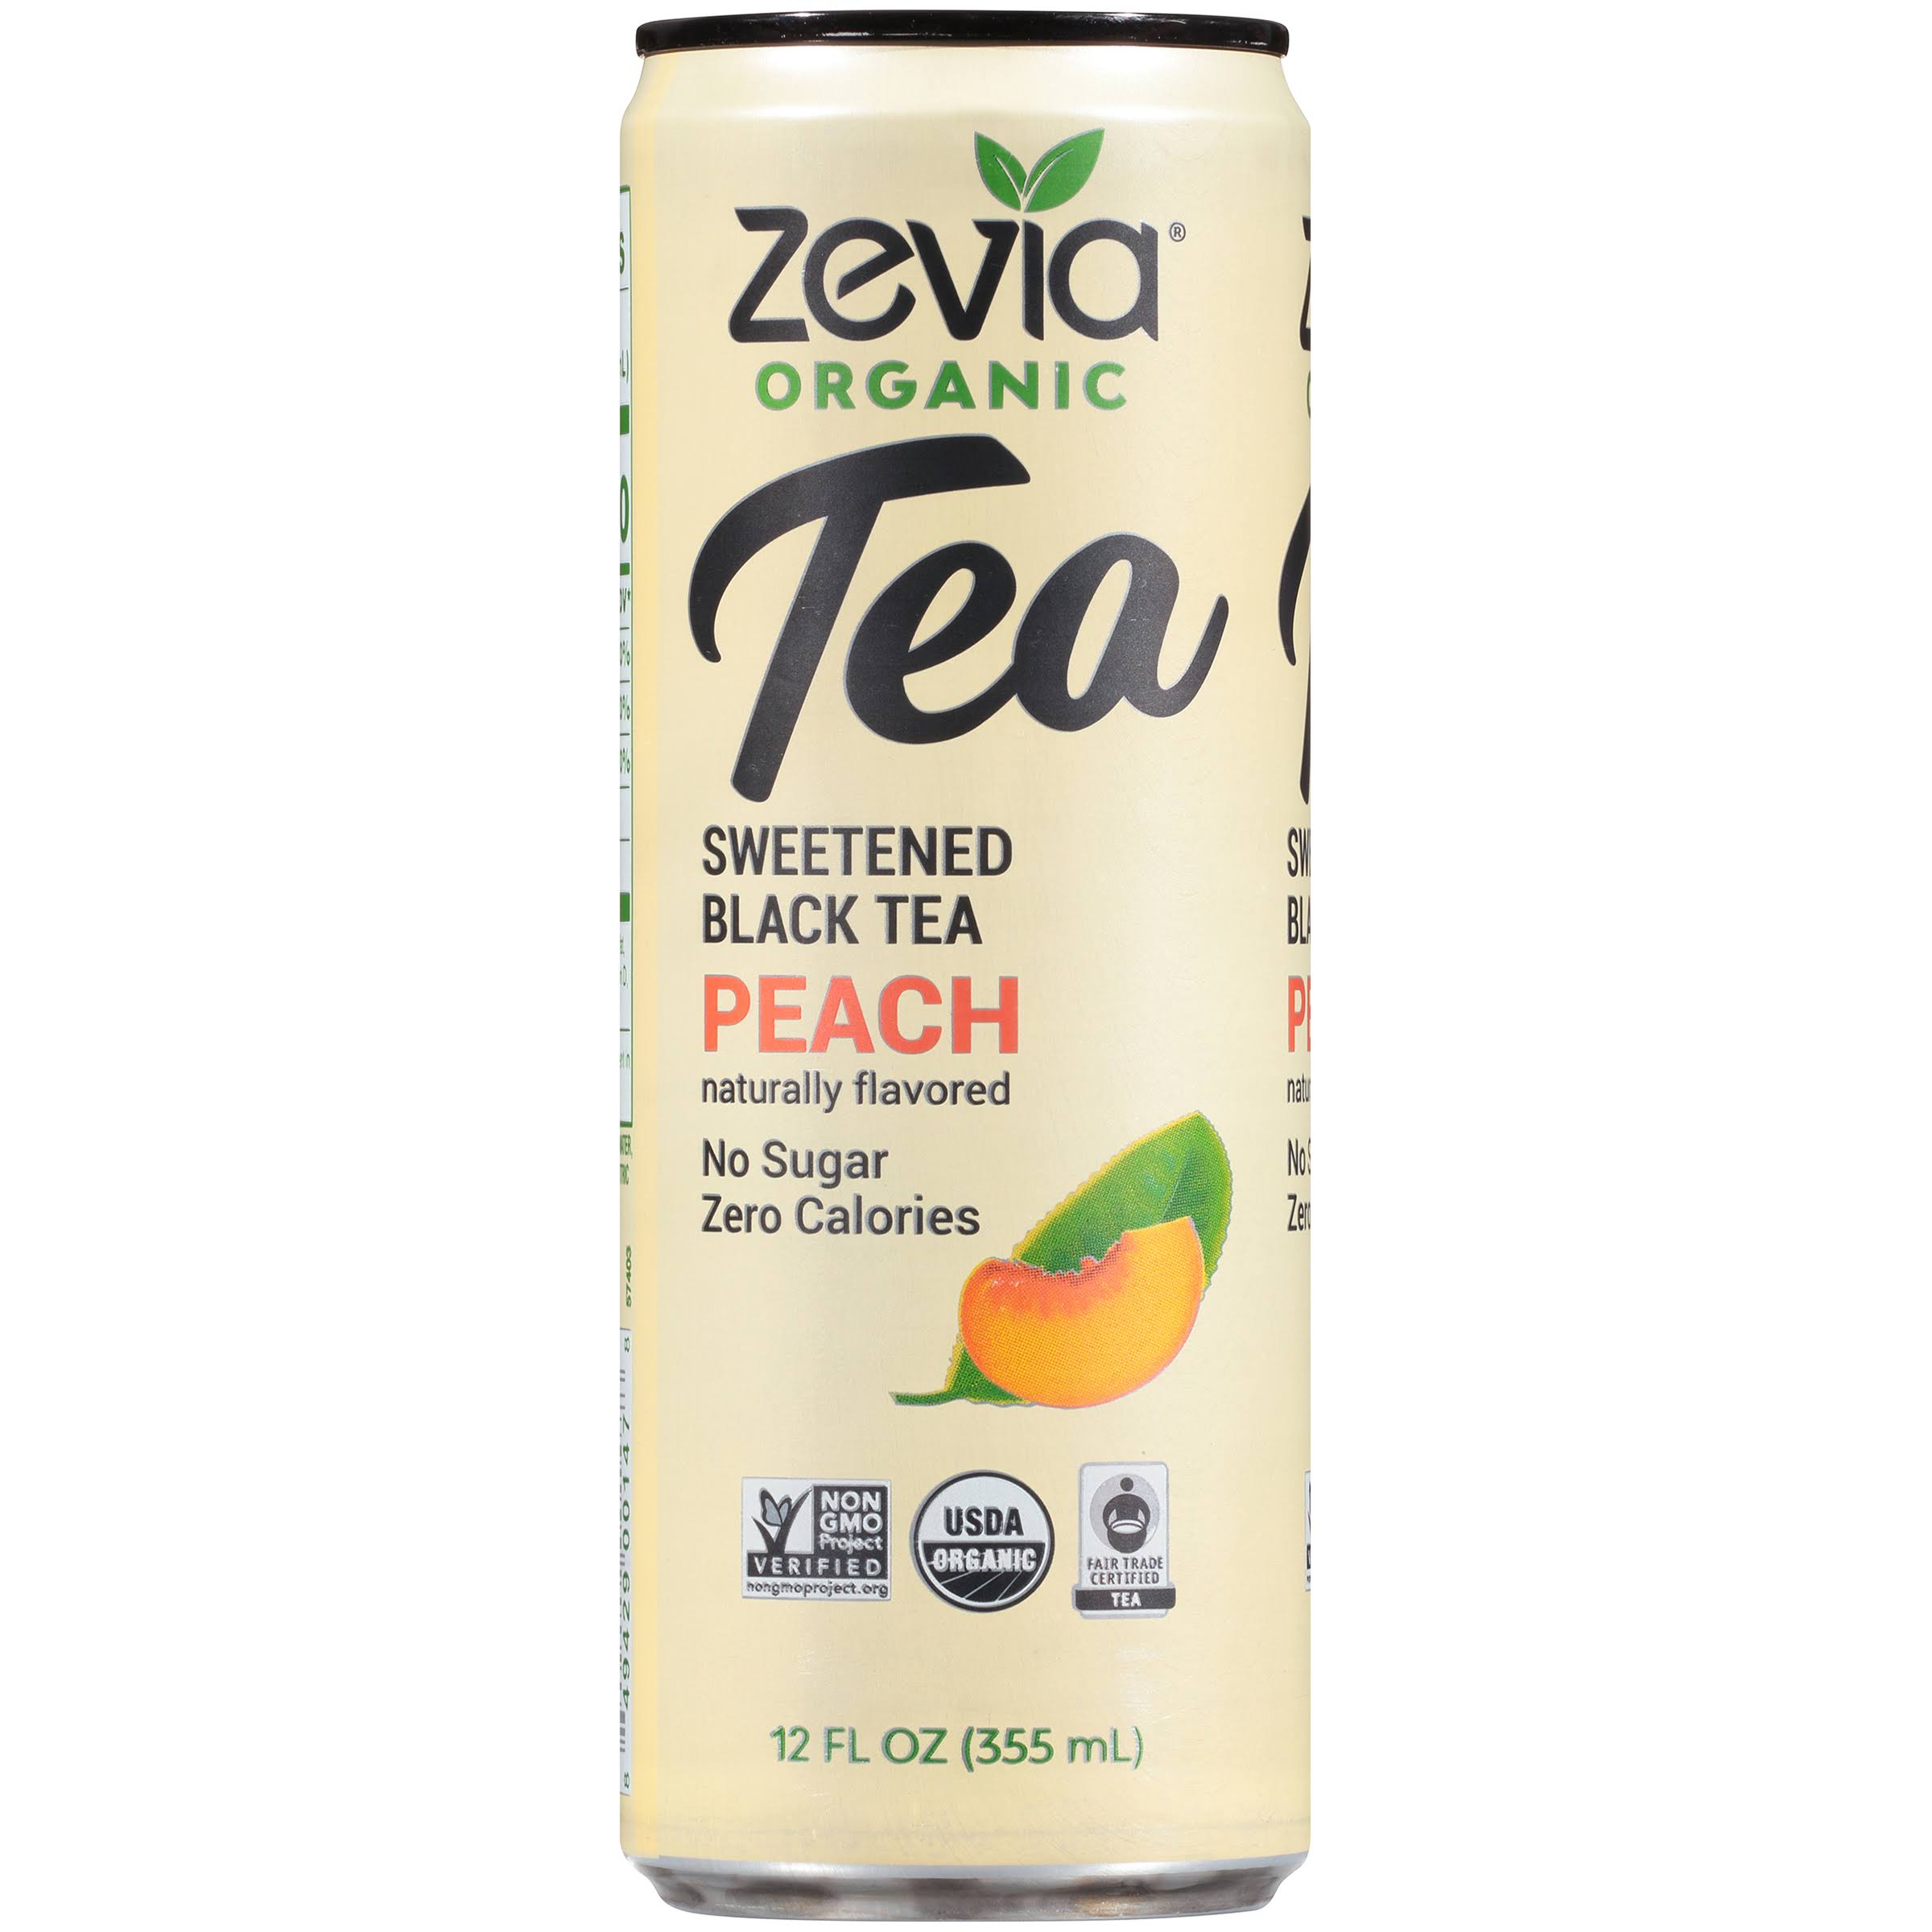 ZEVIA Black Tea Peach